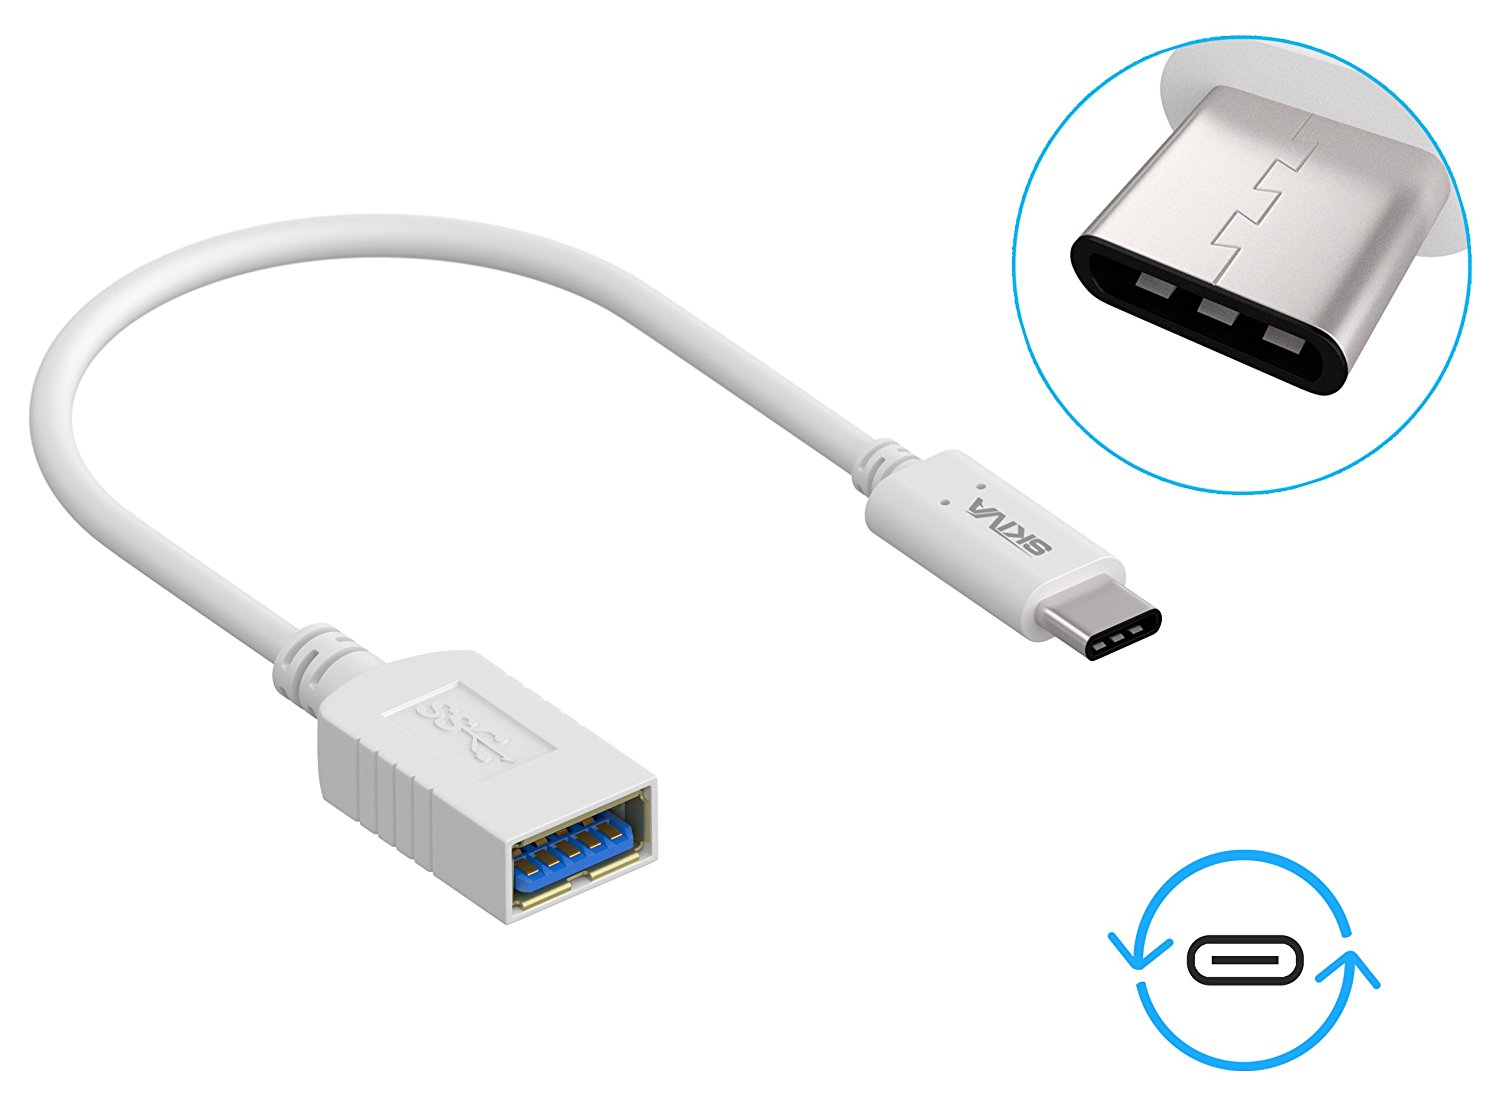 skiva USB-C a USB-A adaptador, convierte de entrada USB Type-C a hembra USB-A